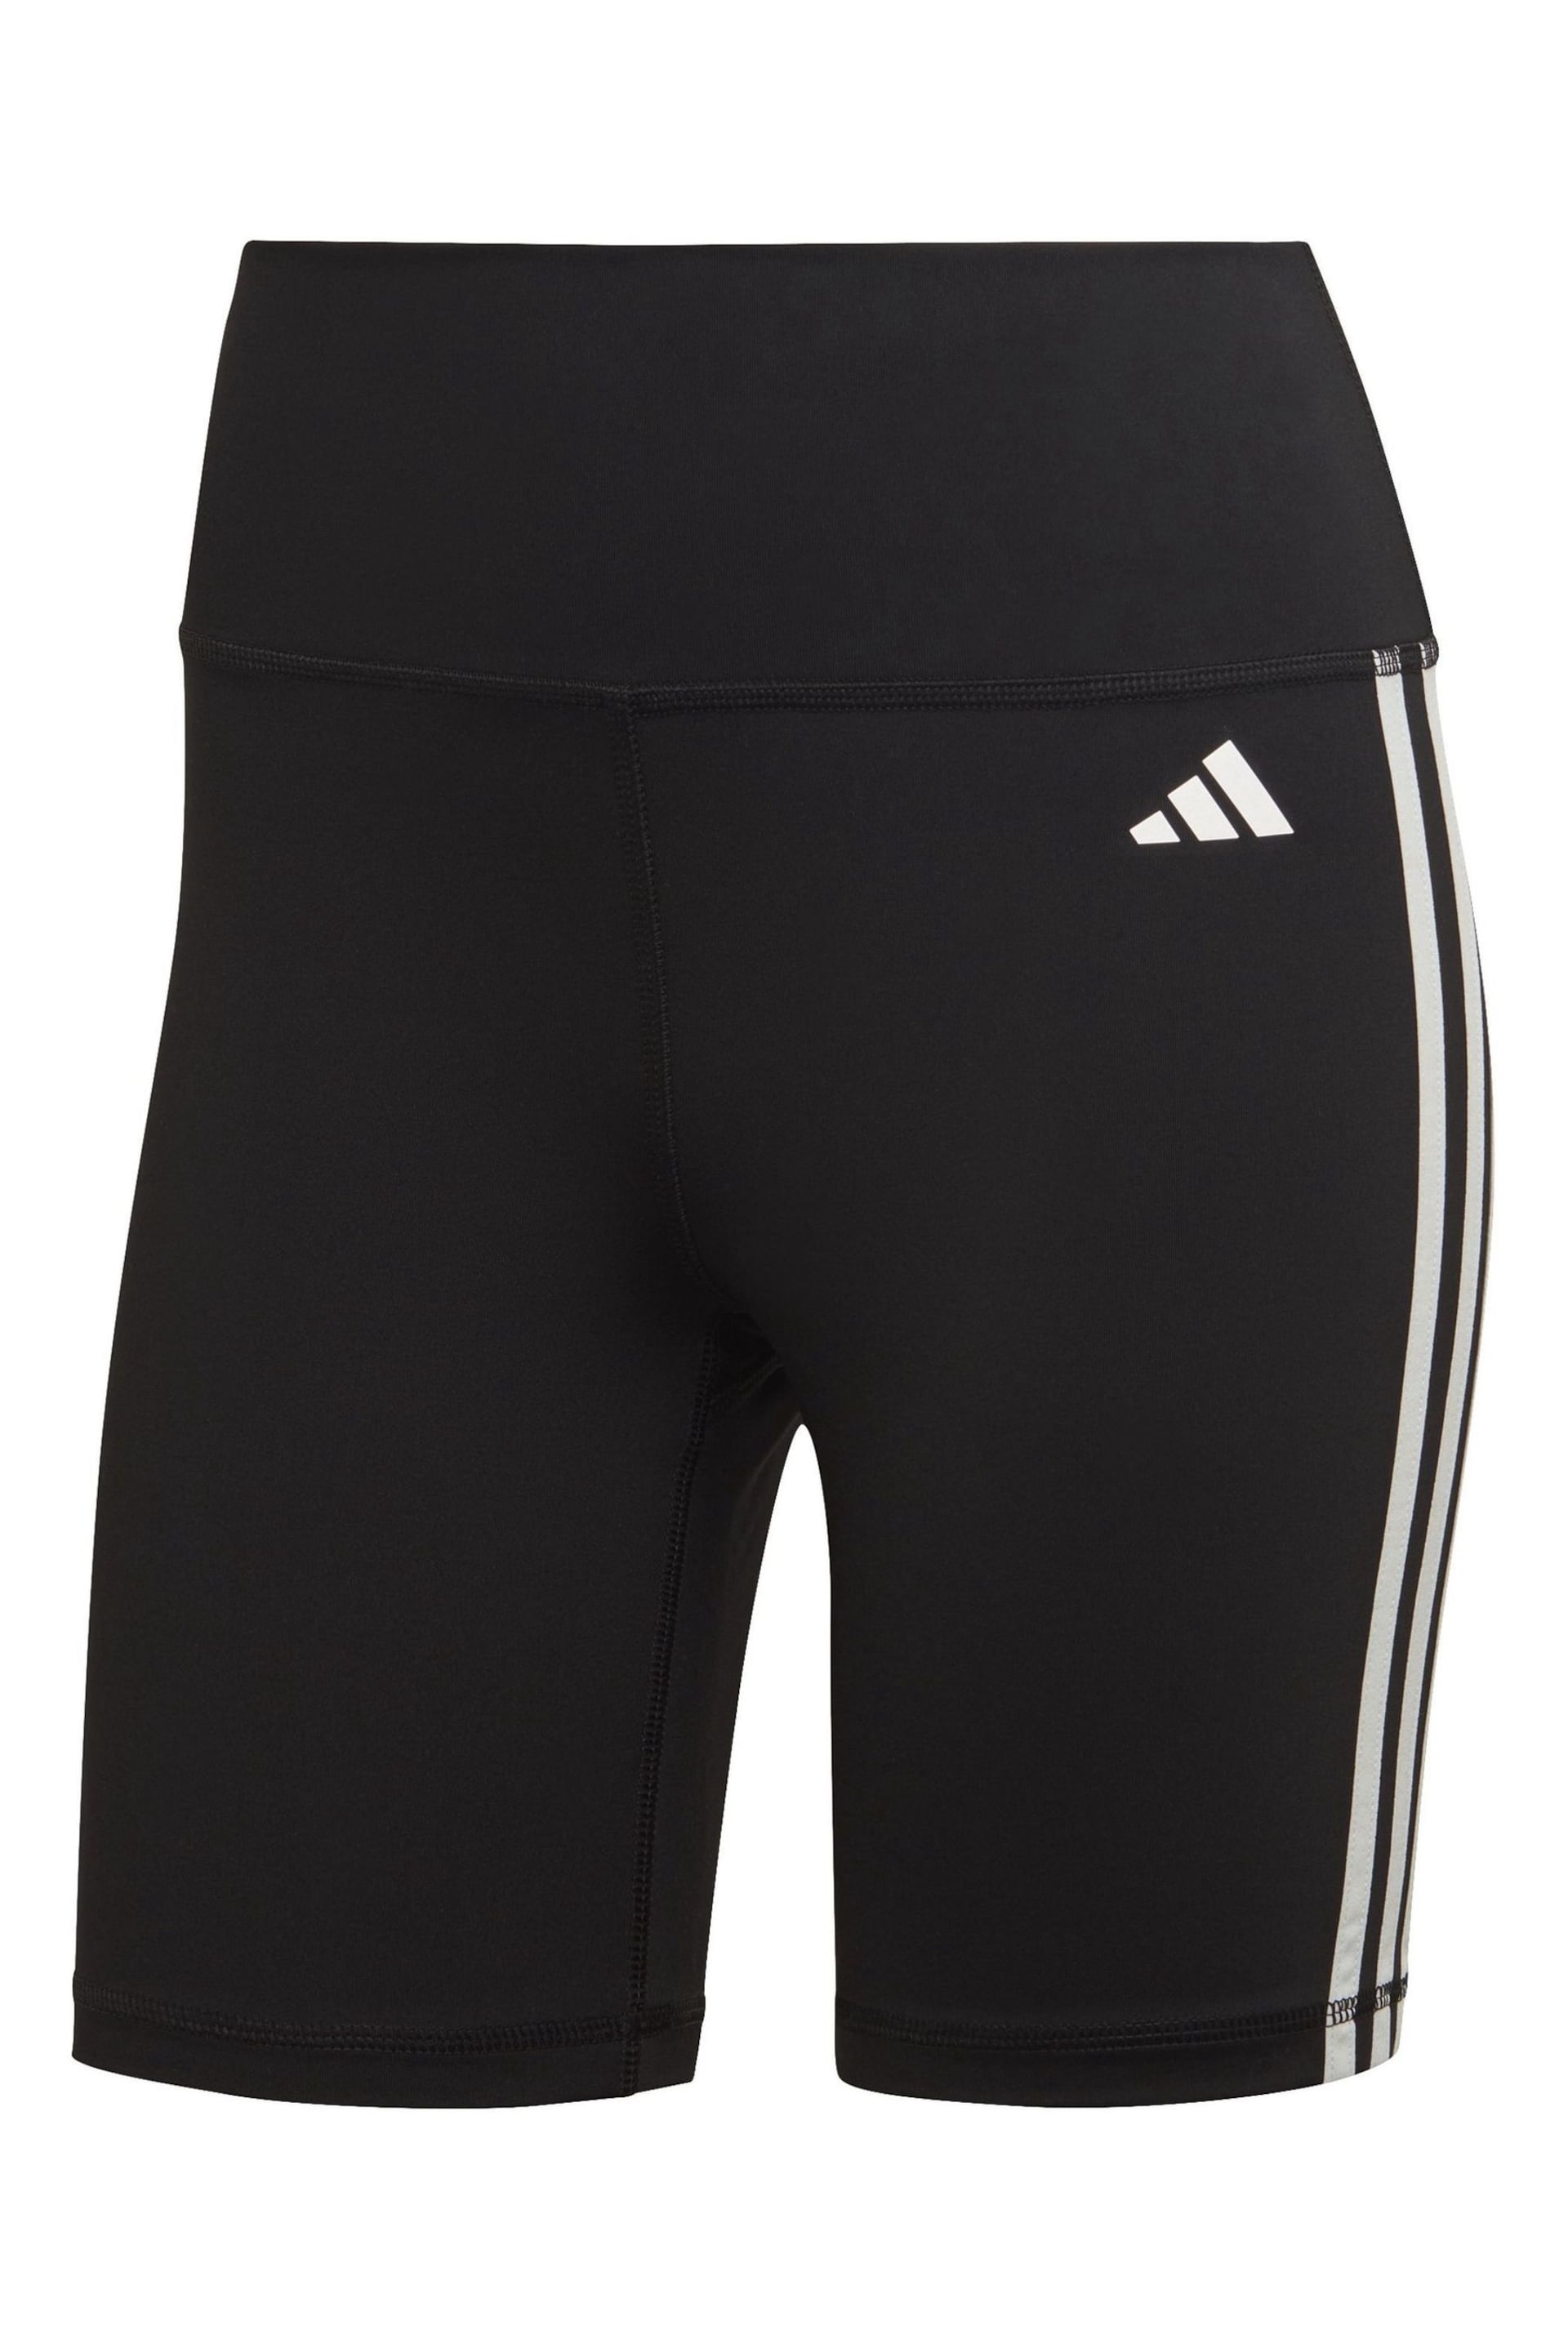 adidas Black Training Essentials 3 Stripes High Waisted Short Leggings - Image 5 of 8